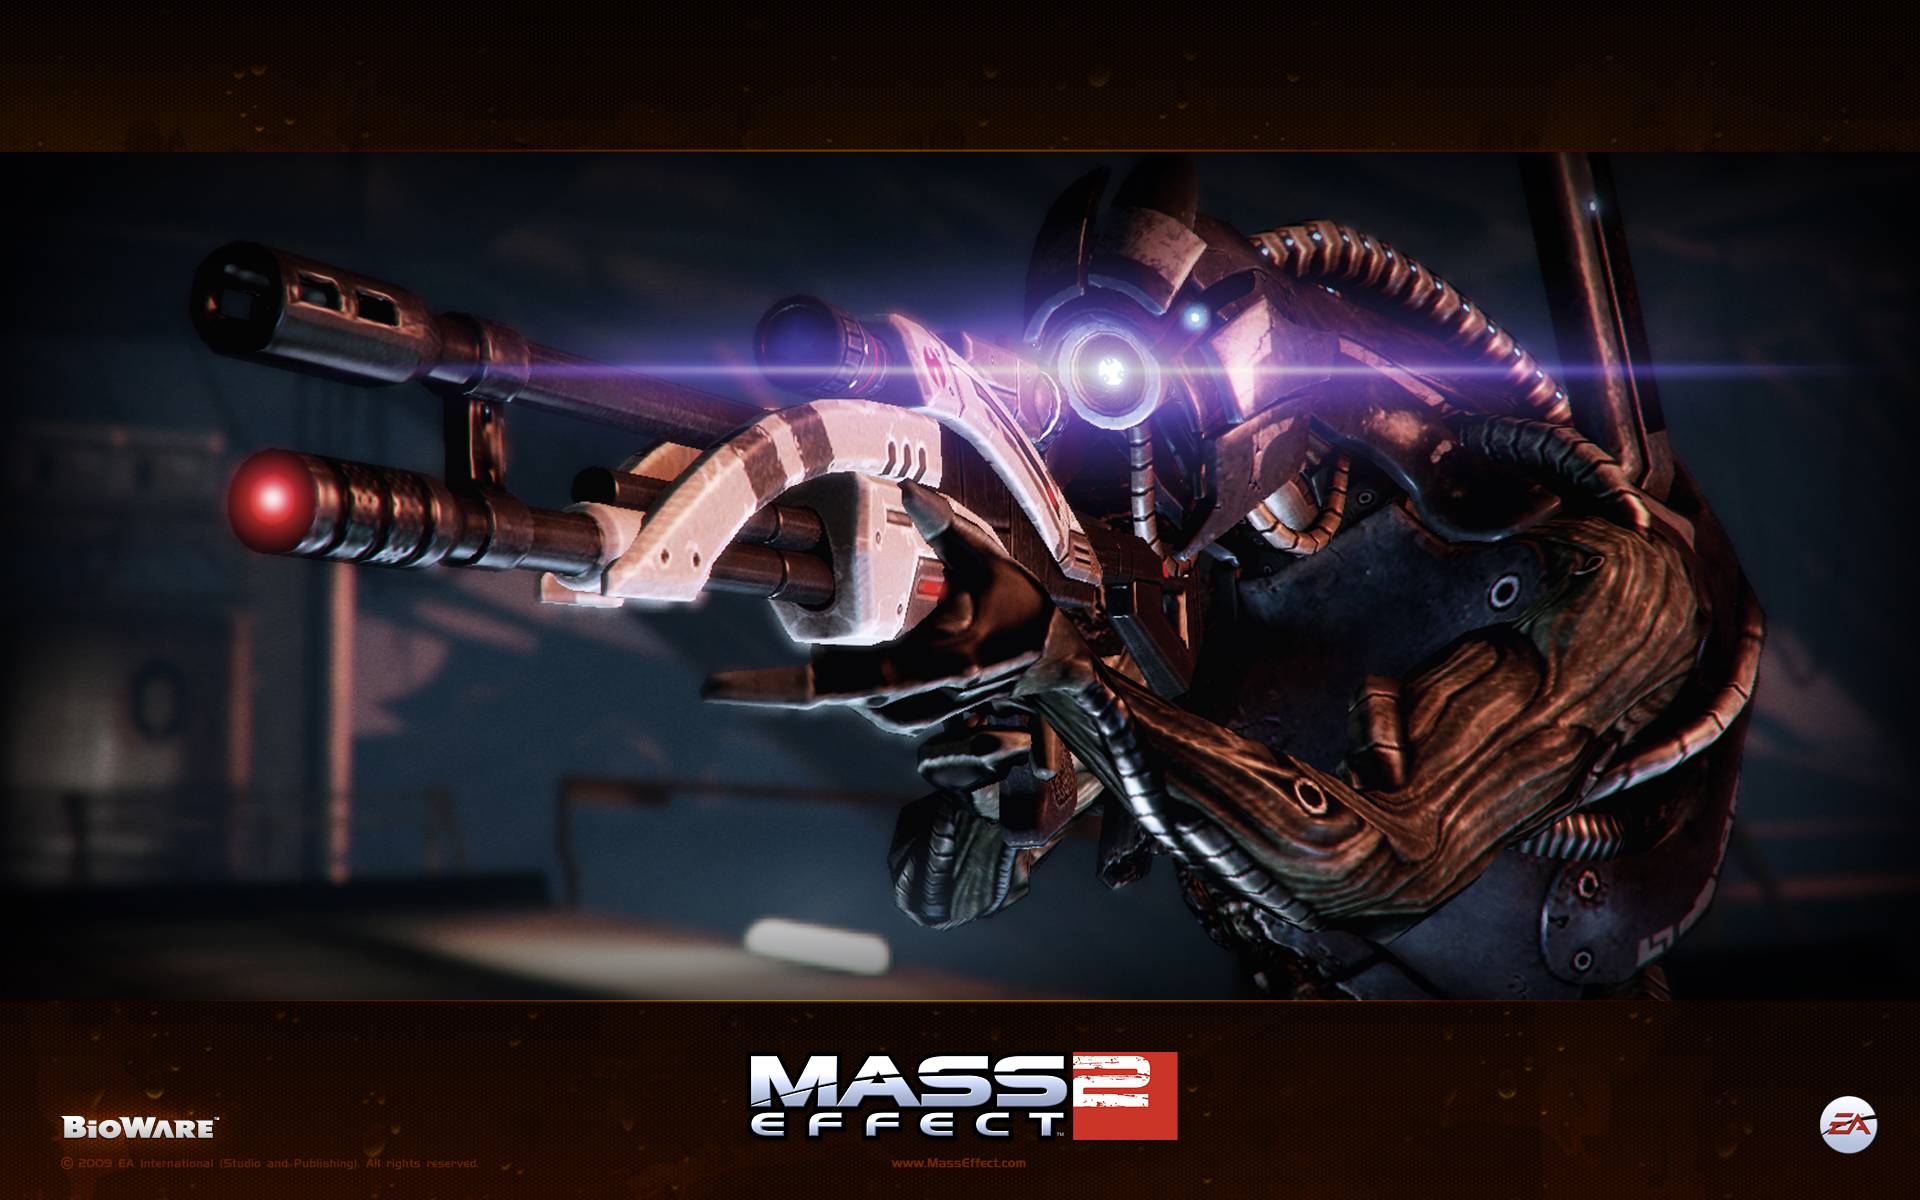 Mass Effect 2 PS3 Wallpaper in HD « GamingBolt.com: Video Game